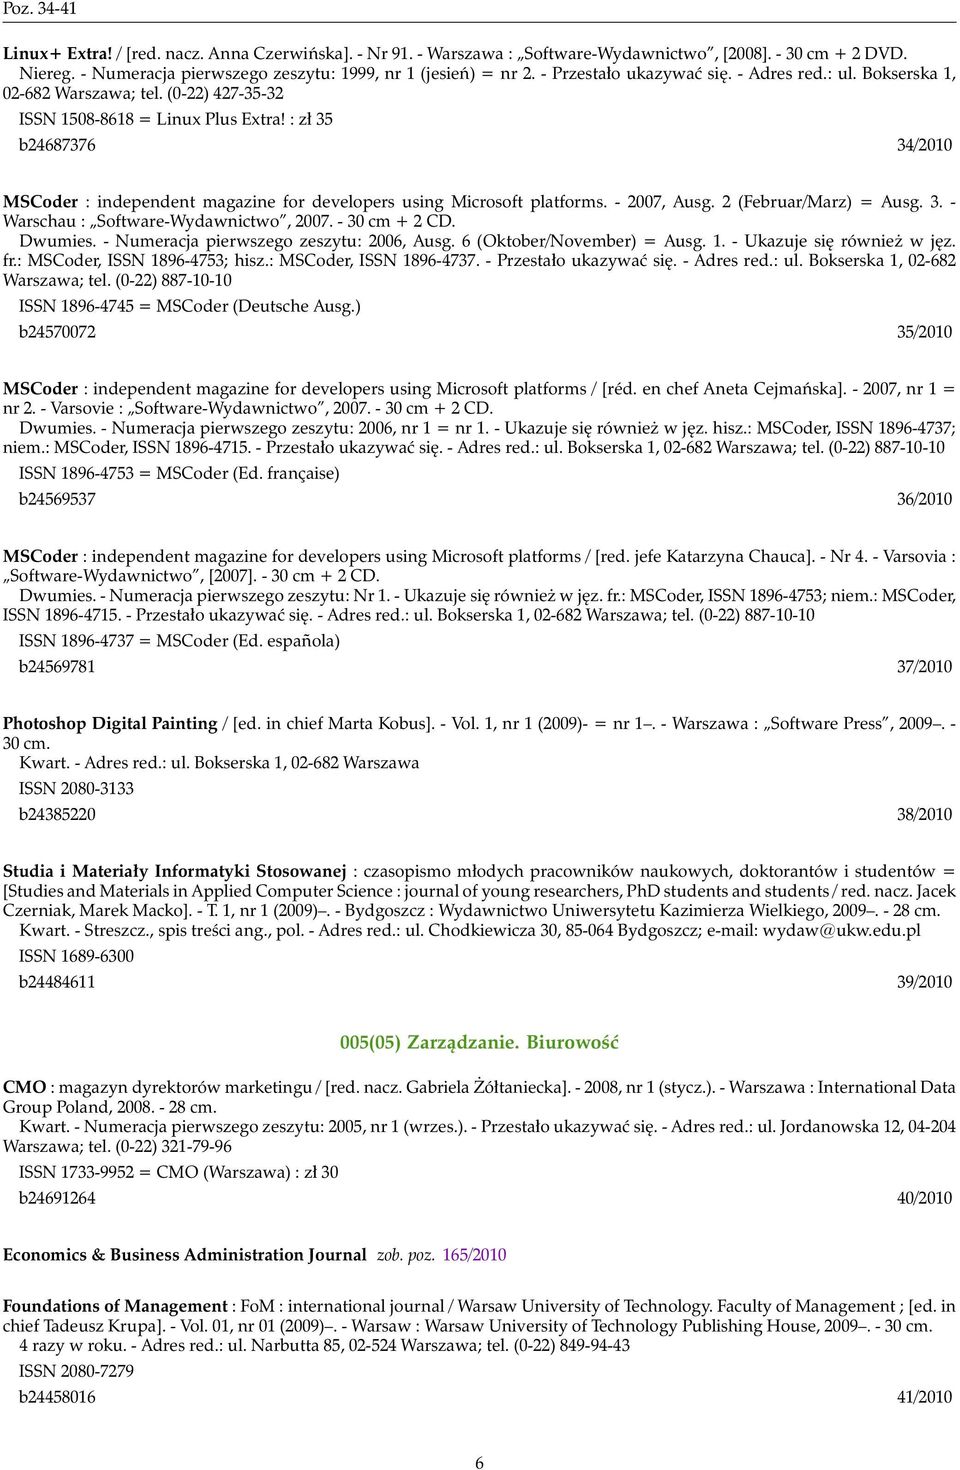 : zł 35 b24687376 34/2010 MSCoder : independent magazine for developers using Microsoft platforms. - 2007, Ausg. 2 (Februar/Marz) = Ausg. 3. - Warschau : Software-Wydawnictwo, 2007. - 30 cm + 2 CD.